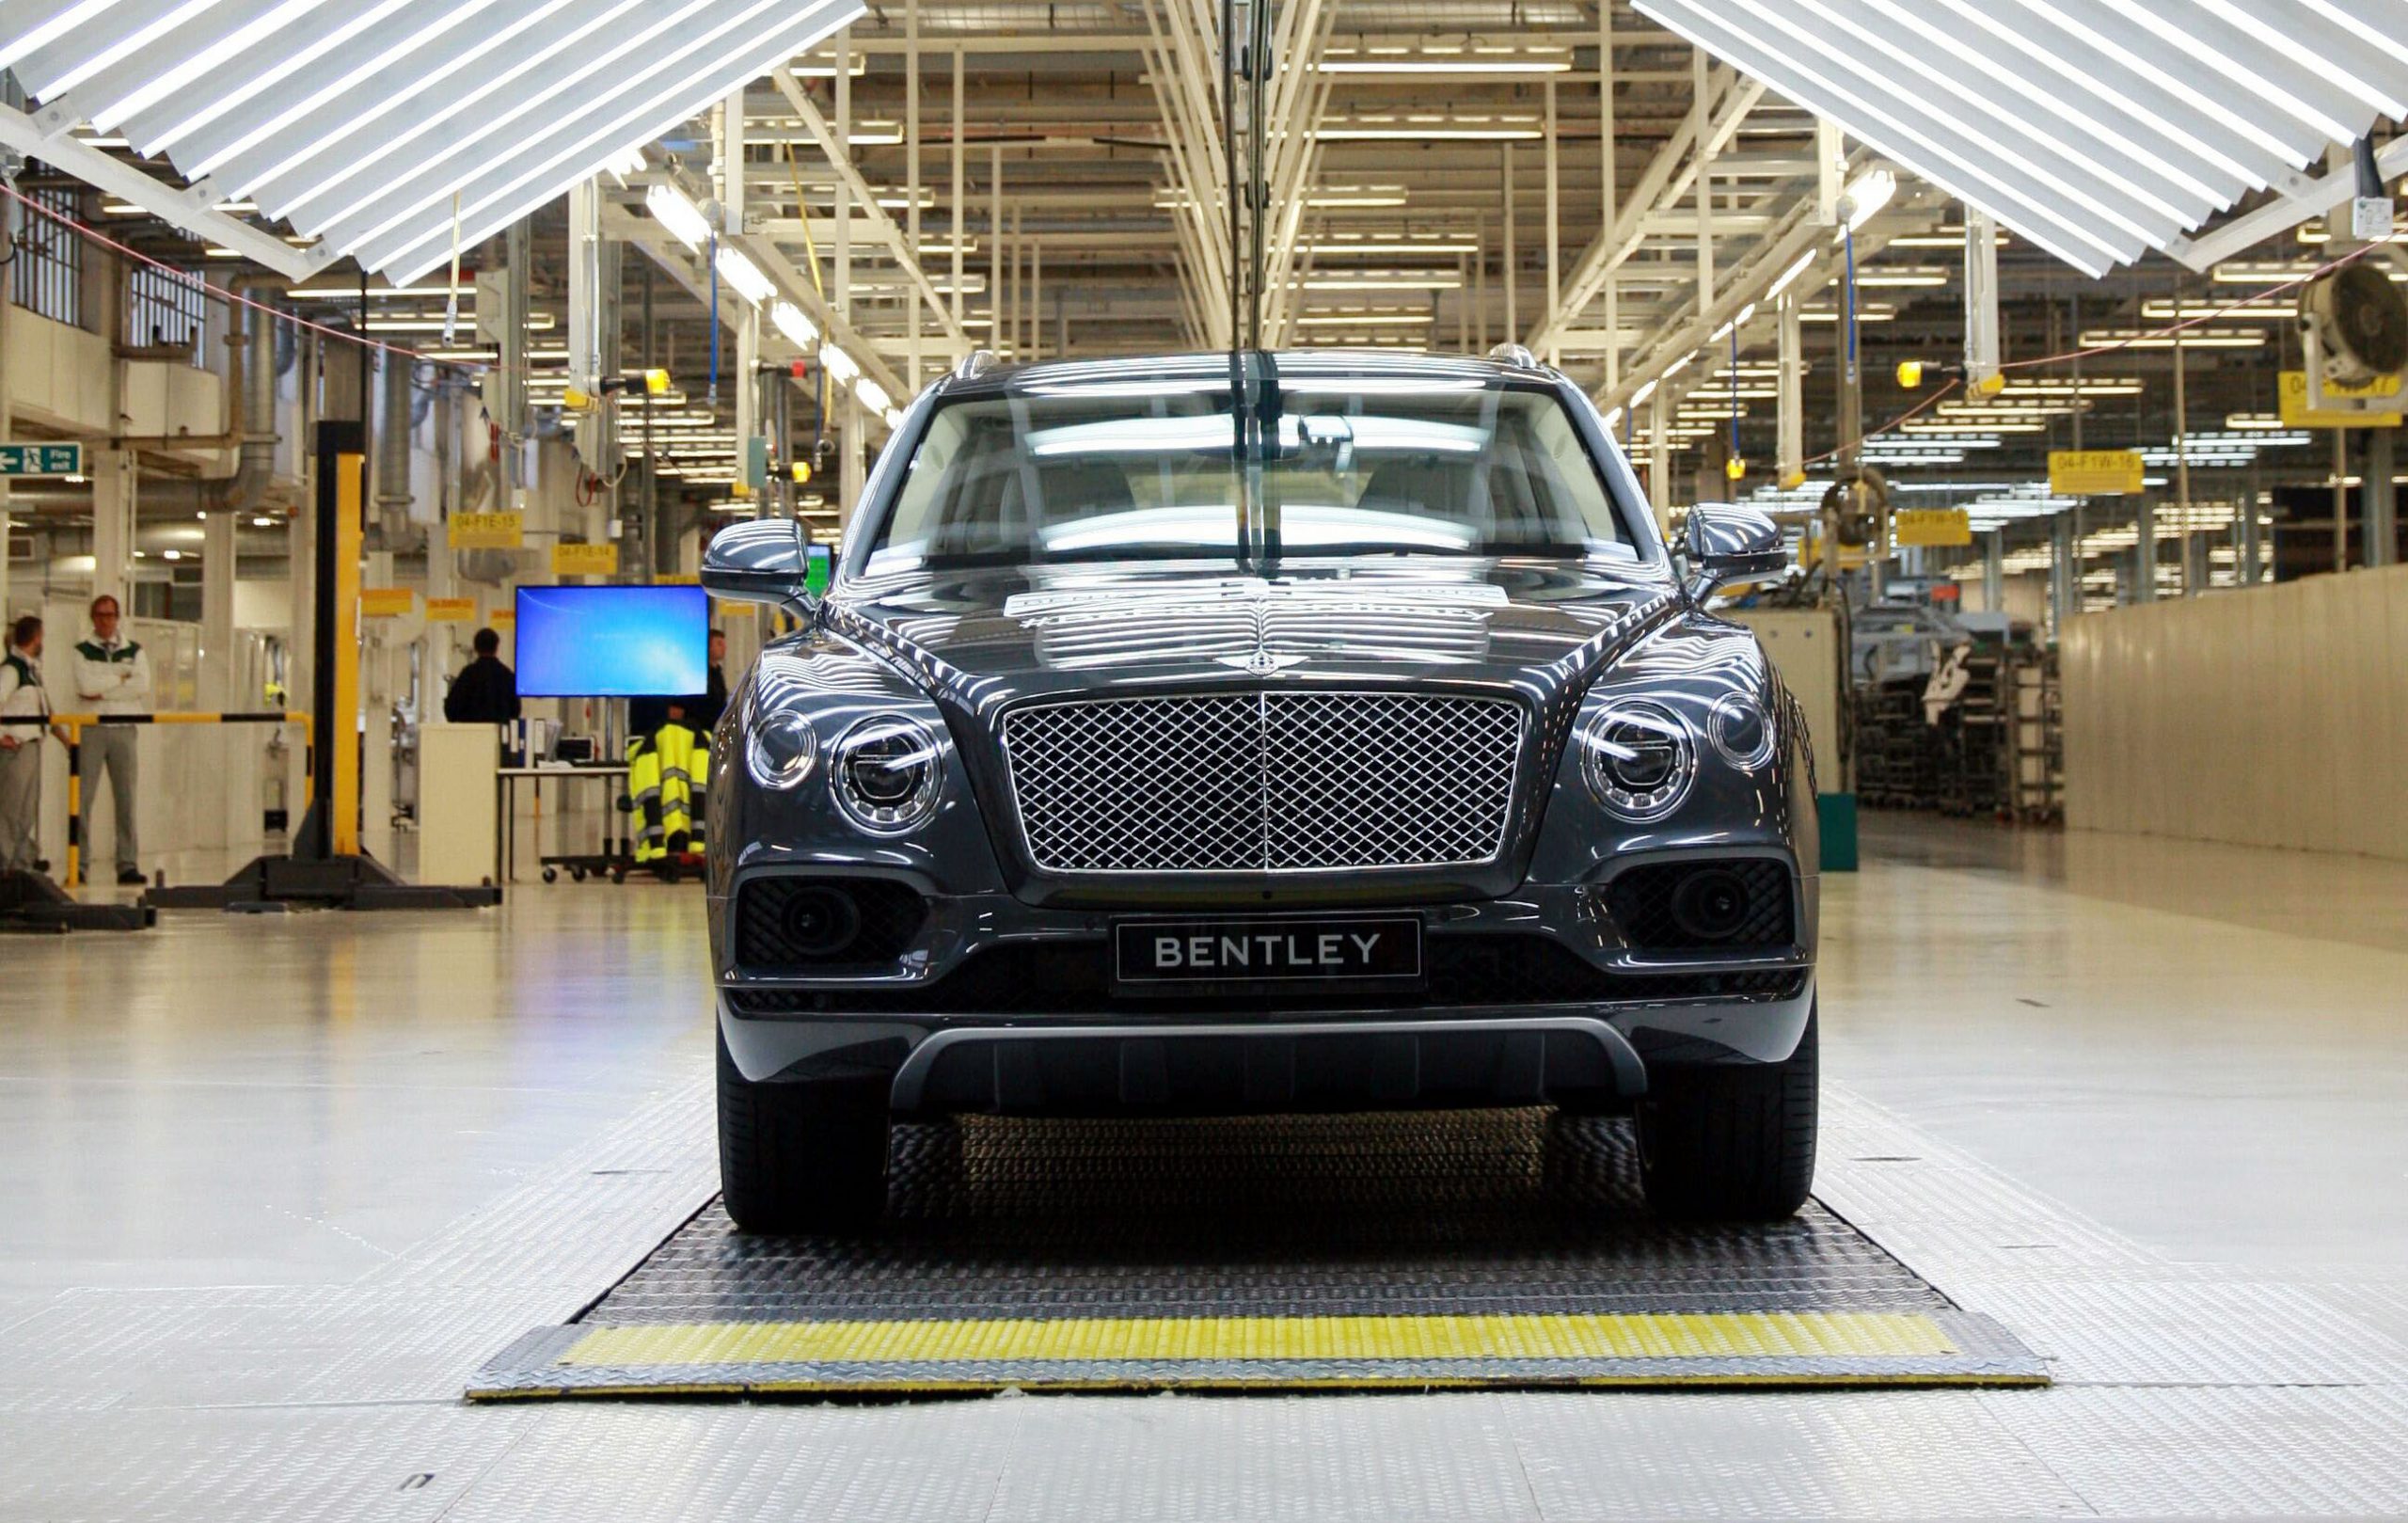 Bentley Bentayga production surpasses 20,000 milestone